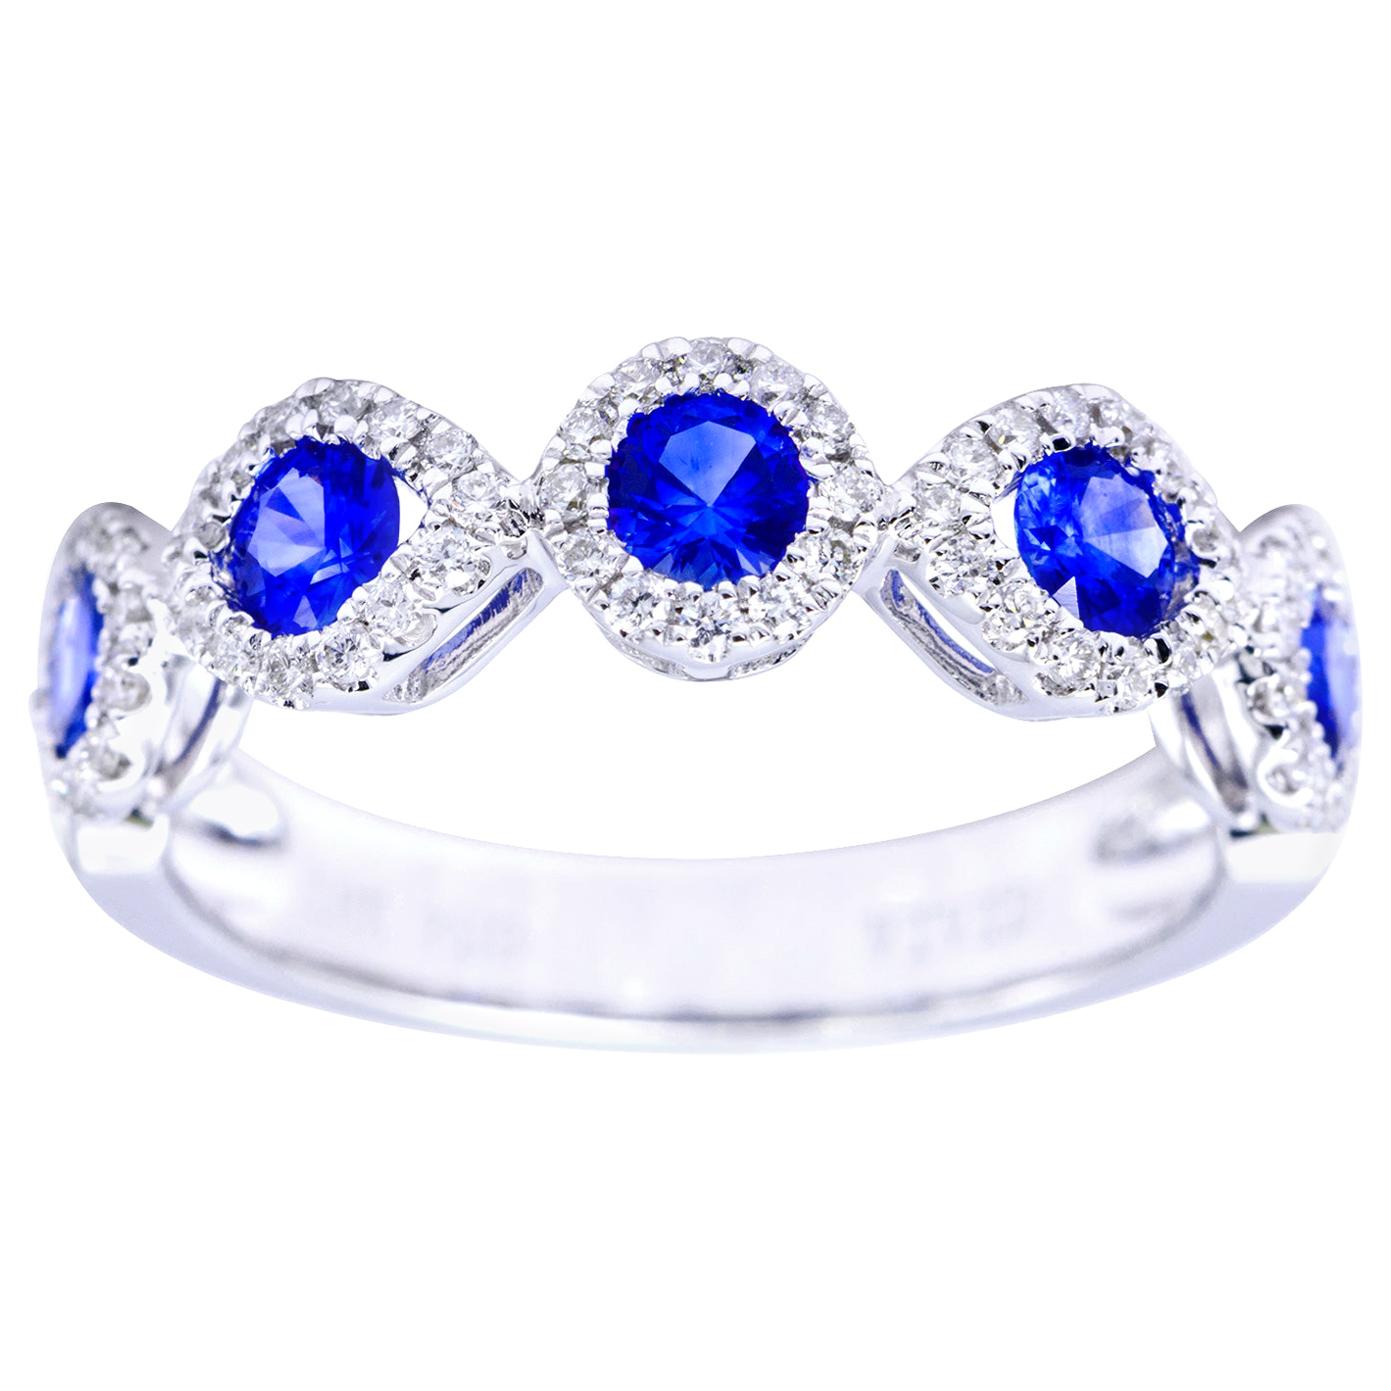 Five Round Sapphire Ring with Diamond Halos